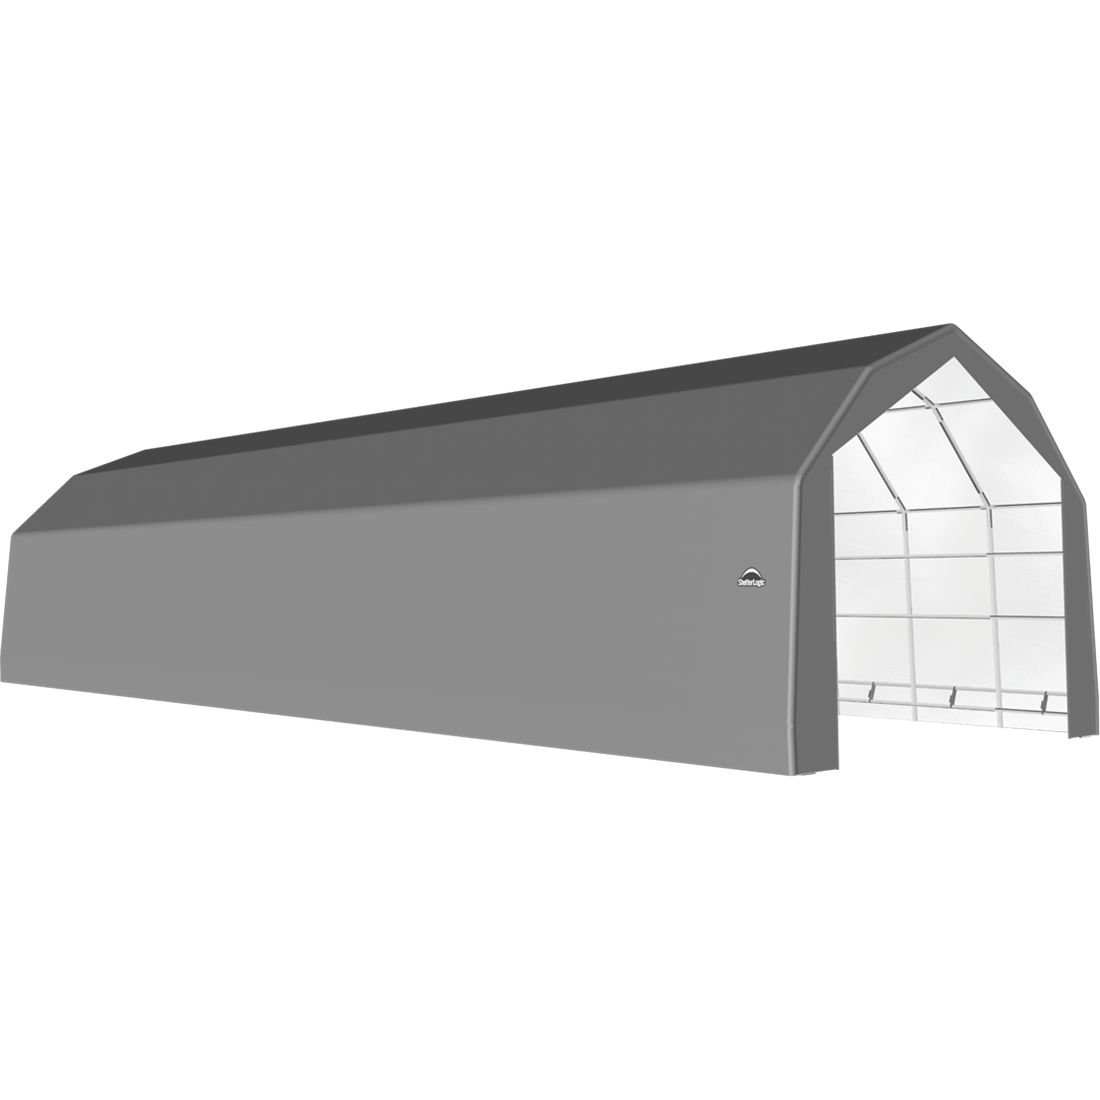 ShelterTech SP Series Barn Shelter, 20 ft. x 60 ft. x 15 ft. Heavy Duty PVC 14.5 oz. Gray